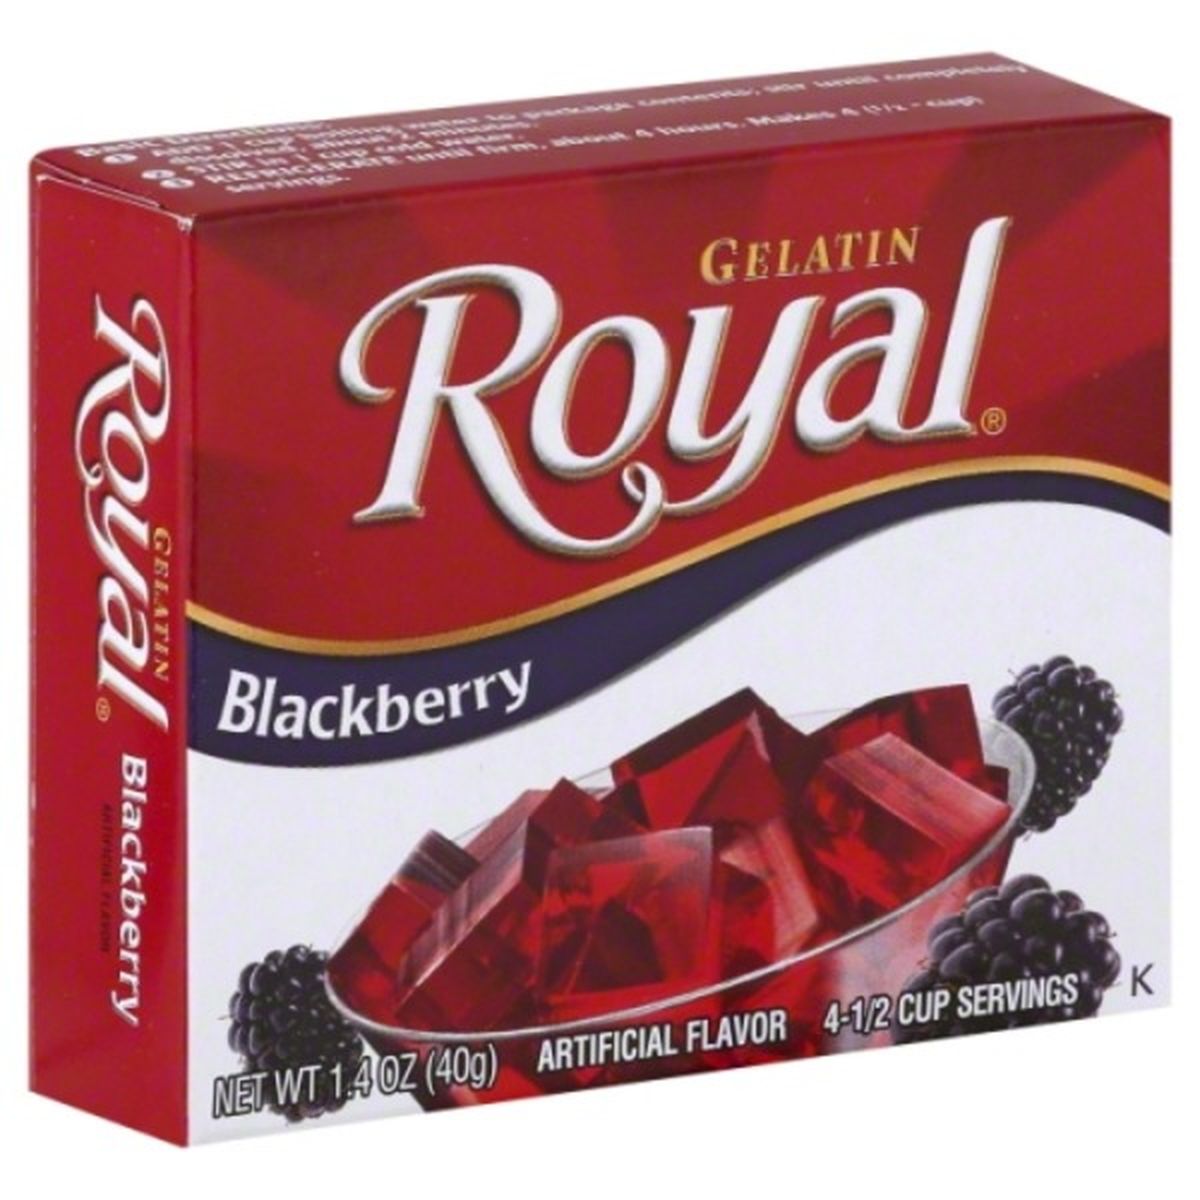 Calories in Royal Gelatin, Blackberry